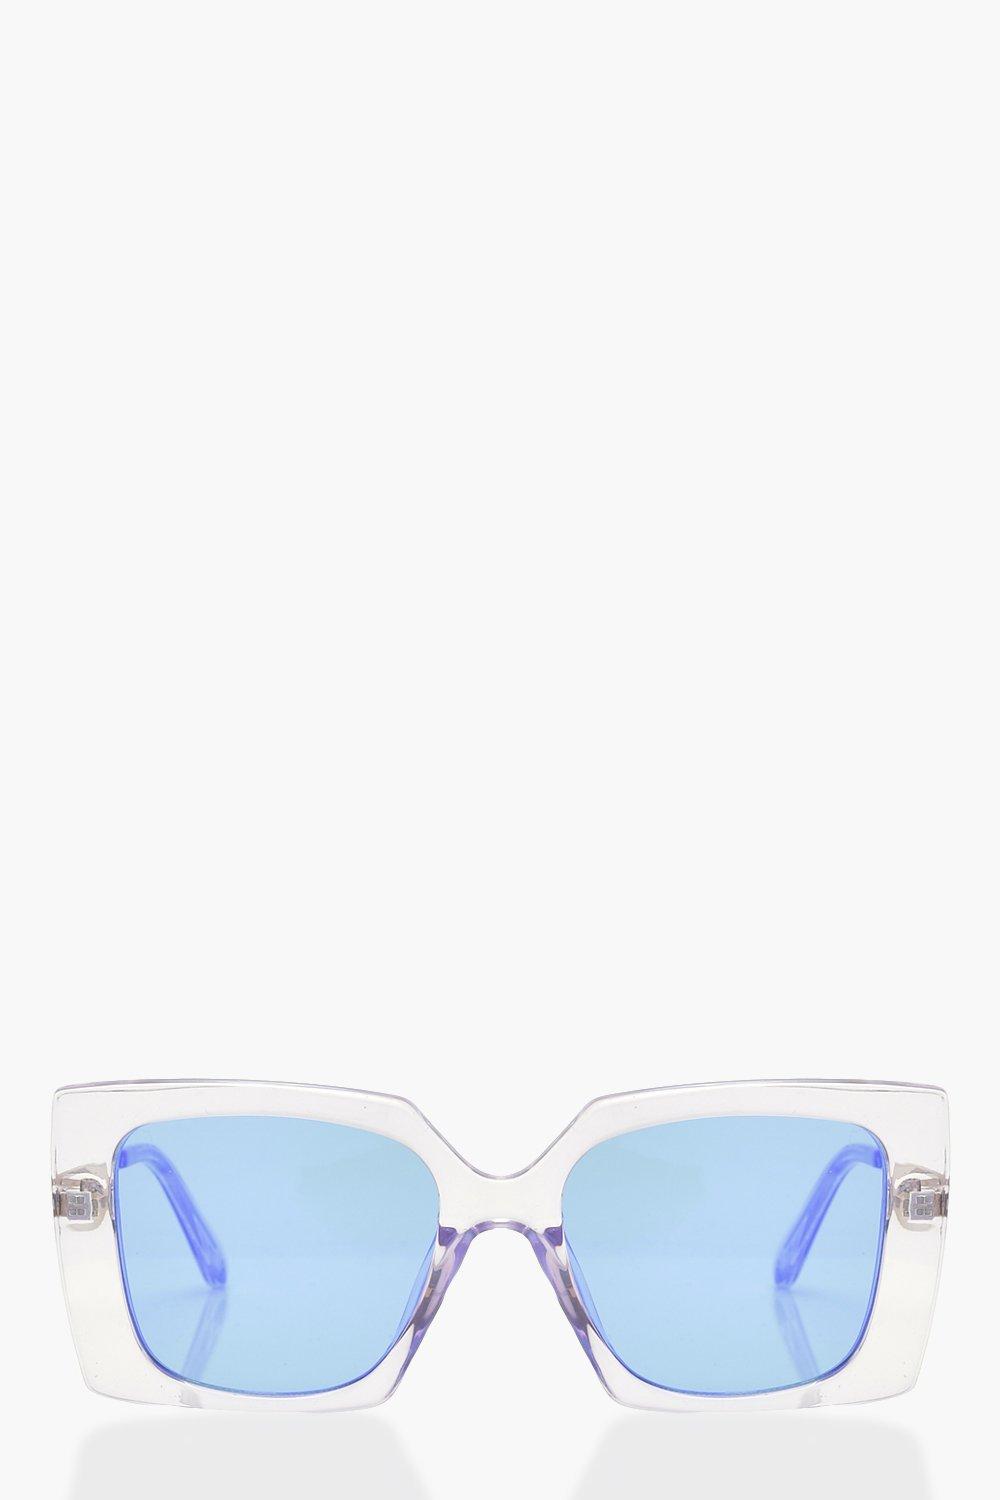 clear glass fashion glasses